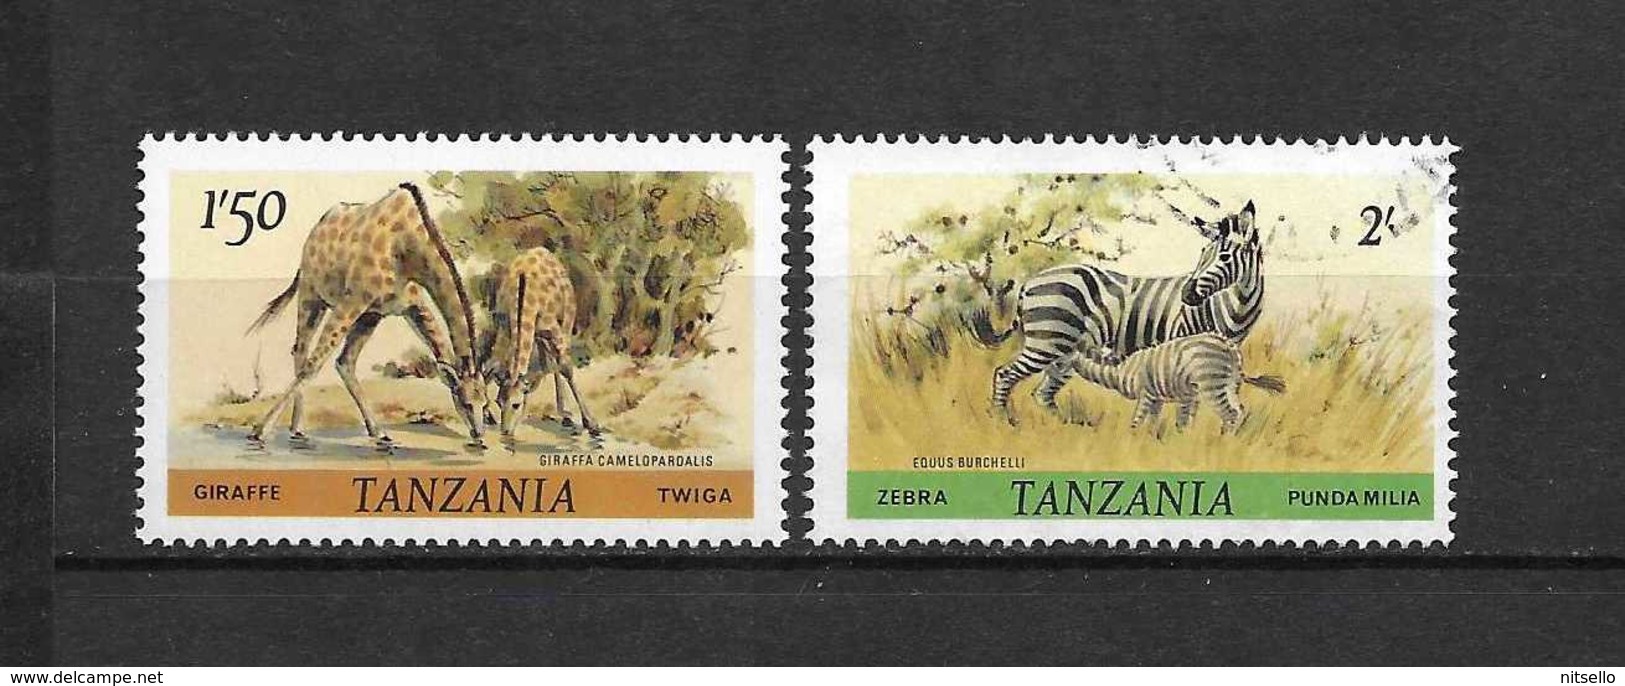 LOTE 1720  ///  TANZANIA     ¡¡¡¡ LIQUIDATION !!!! - Tanzania (1964-...)